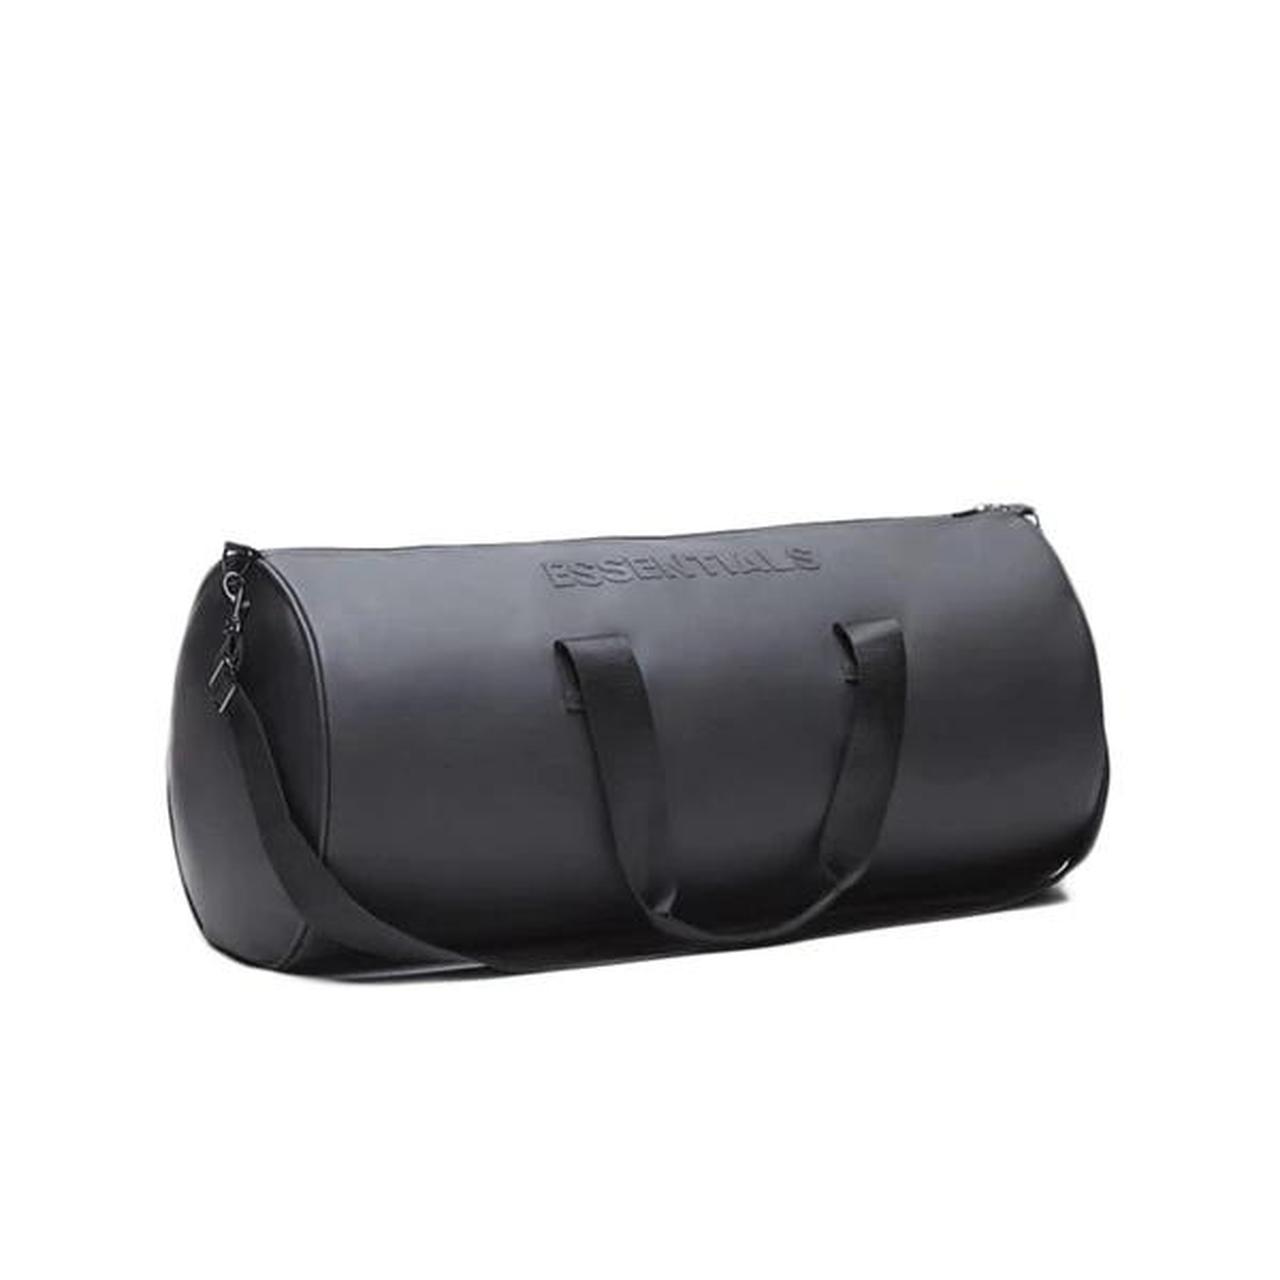 Supreme SS18 Tan Duffle Bag 🏆 Trusted Seller 🚚 Fast - Depop